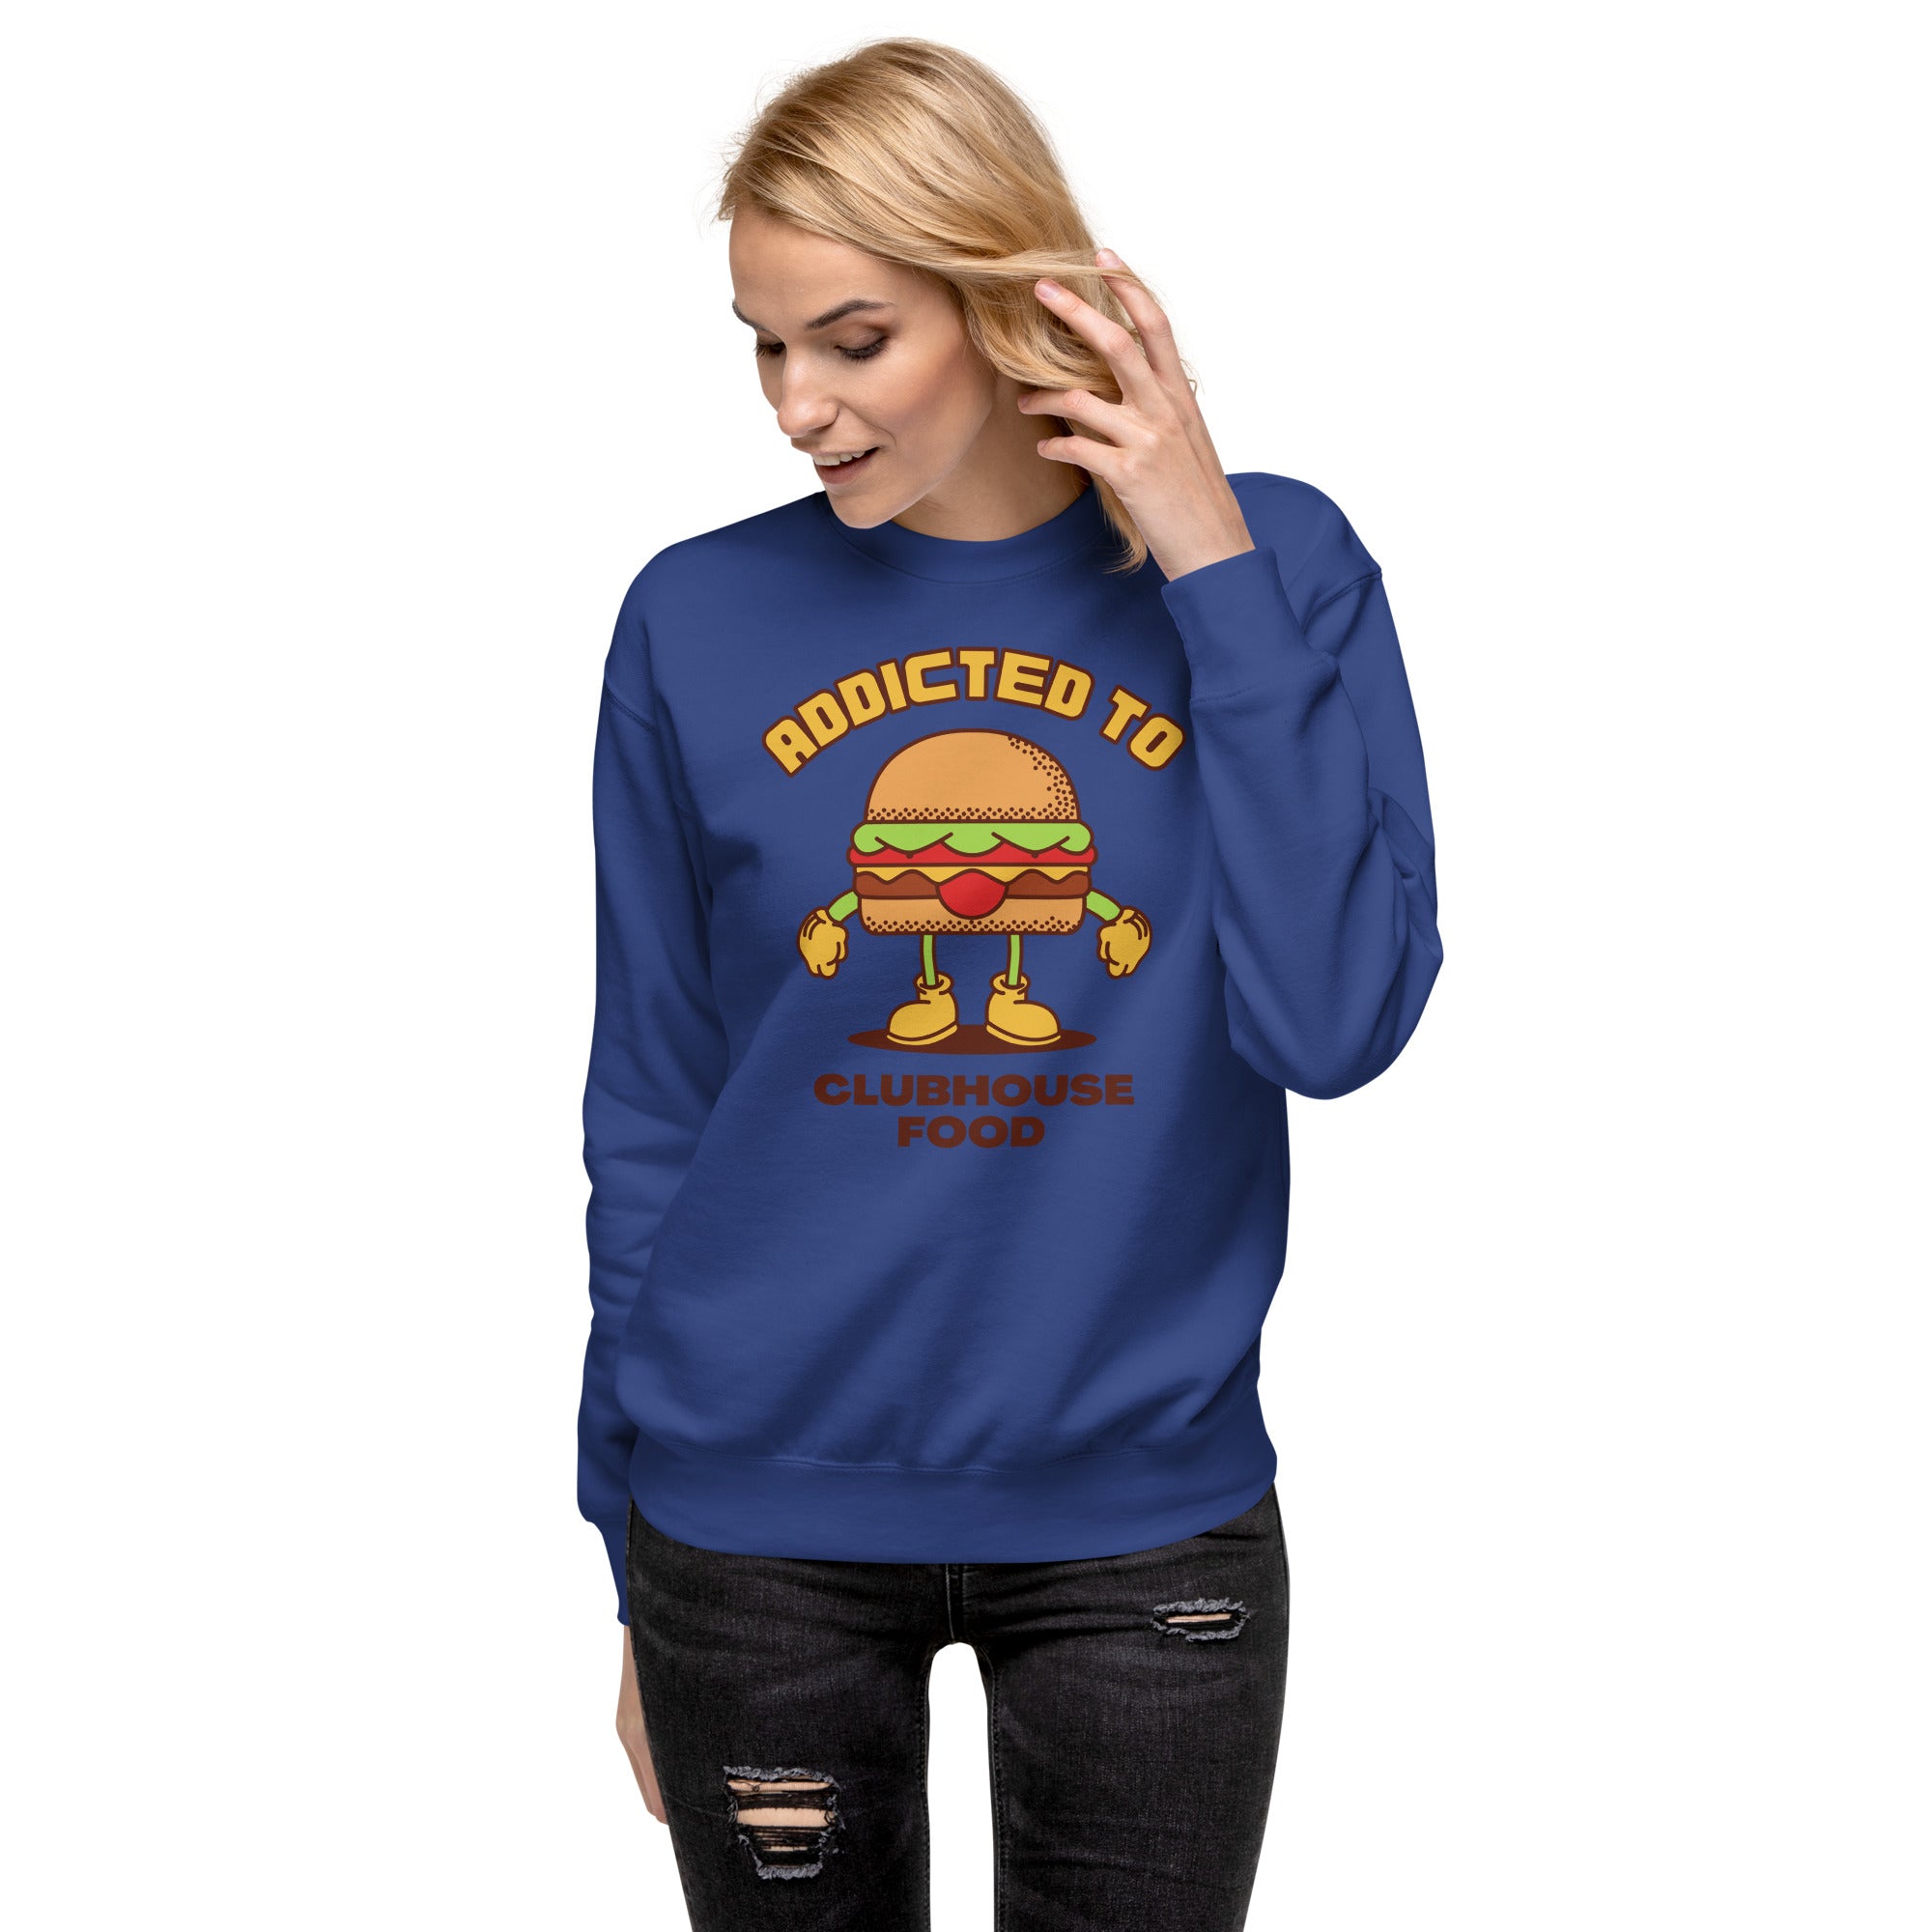 Addicted To Clubhouse Food Women's Premium Sweatshirt